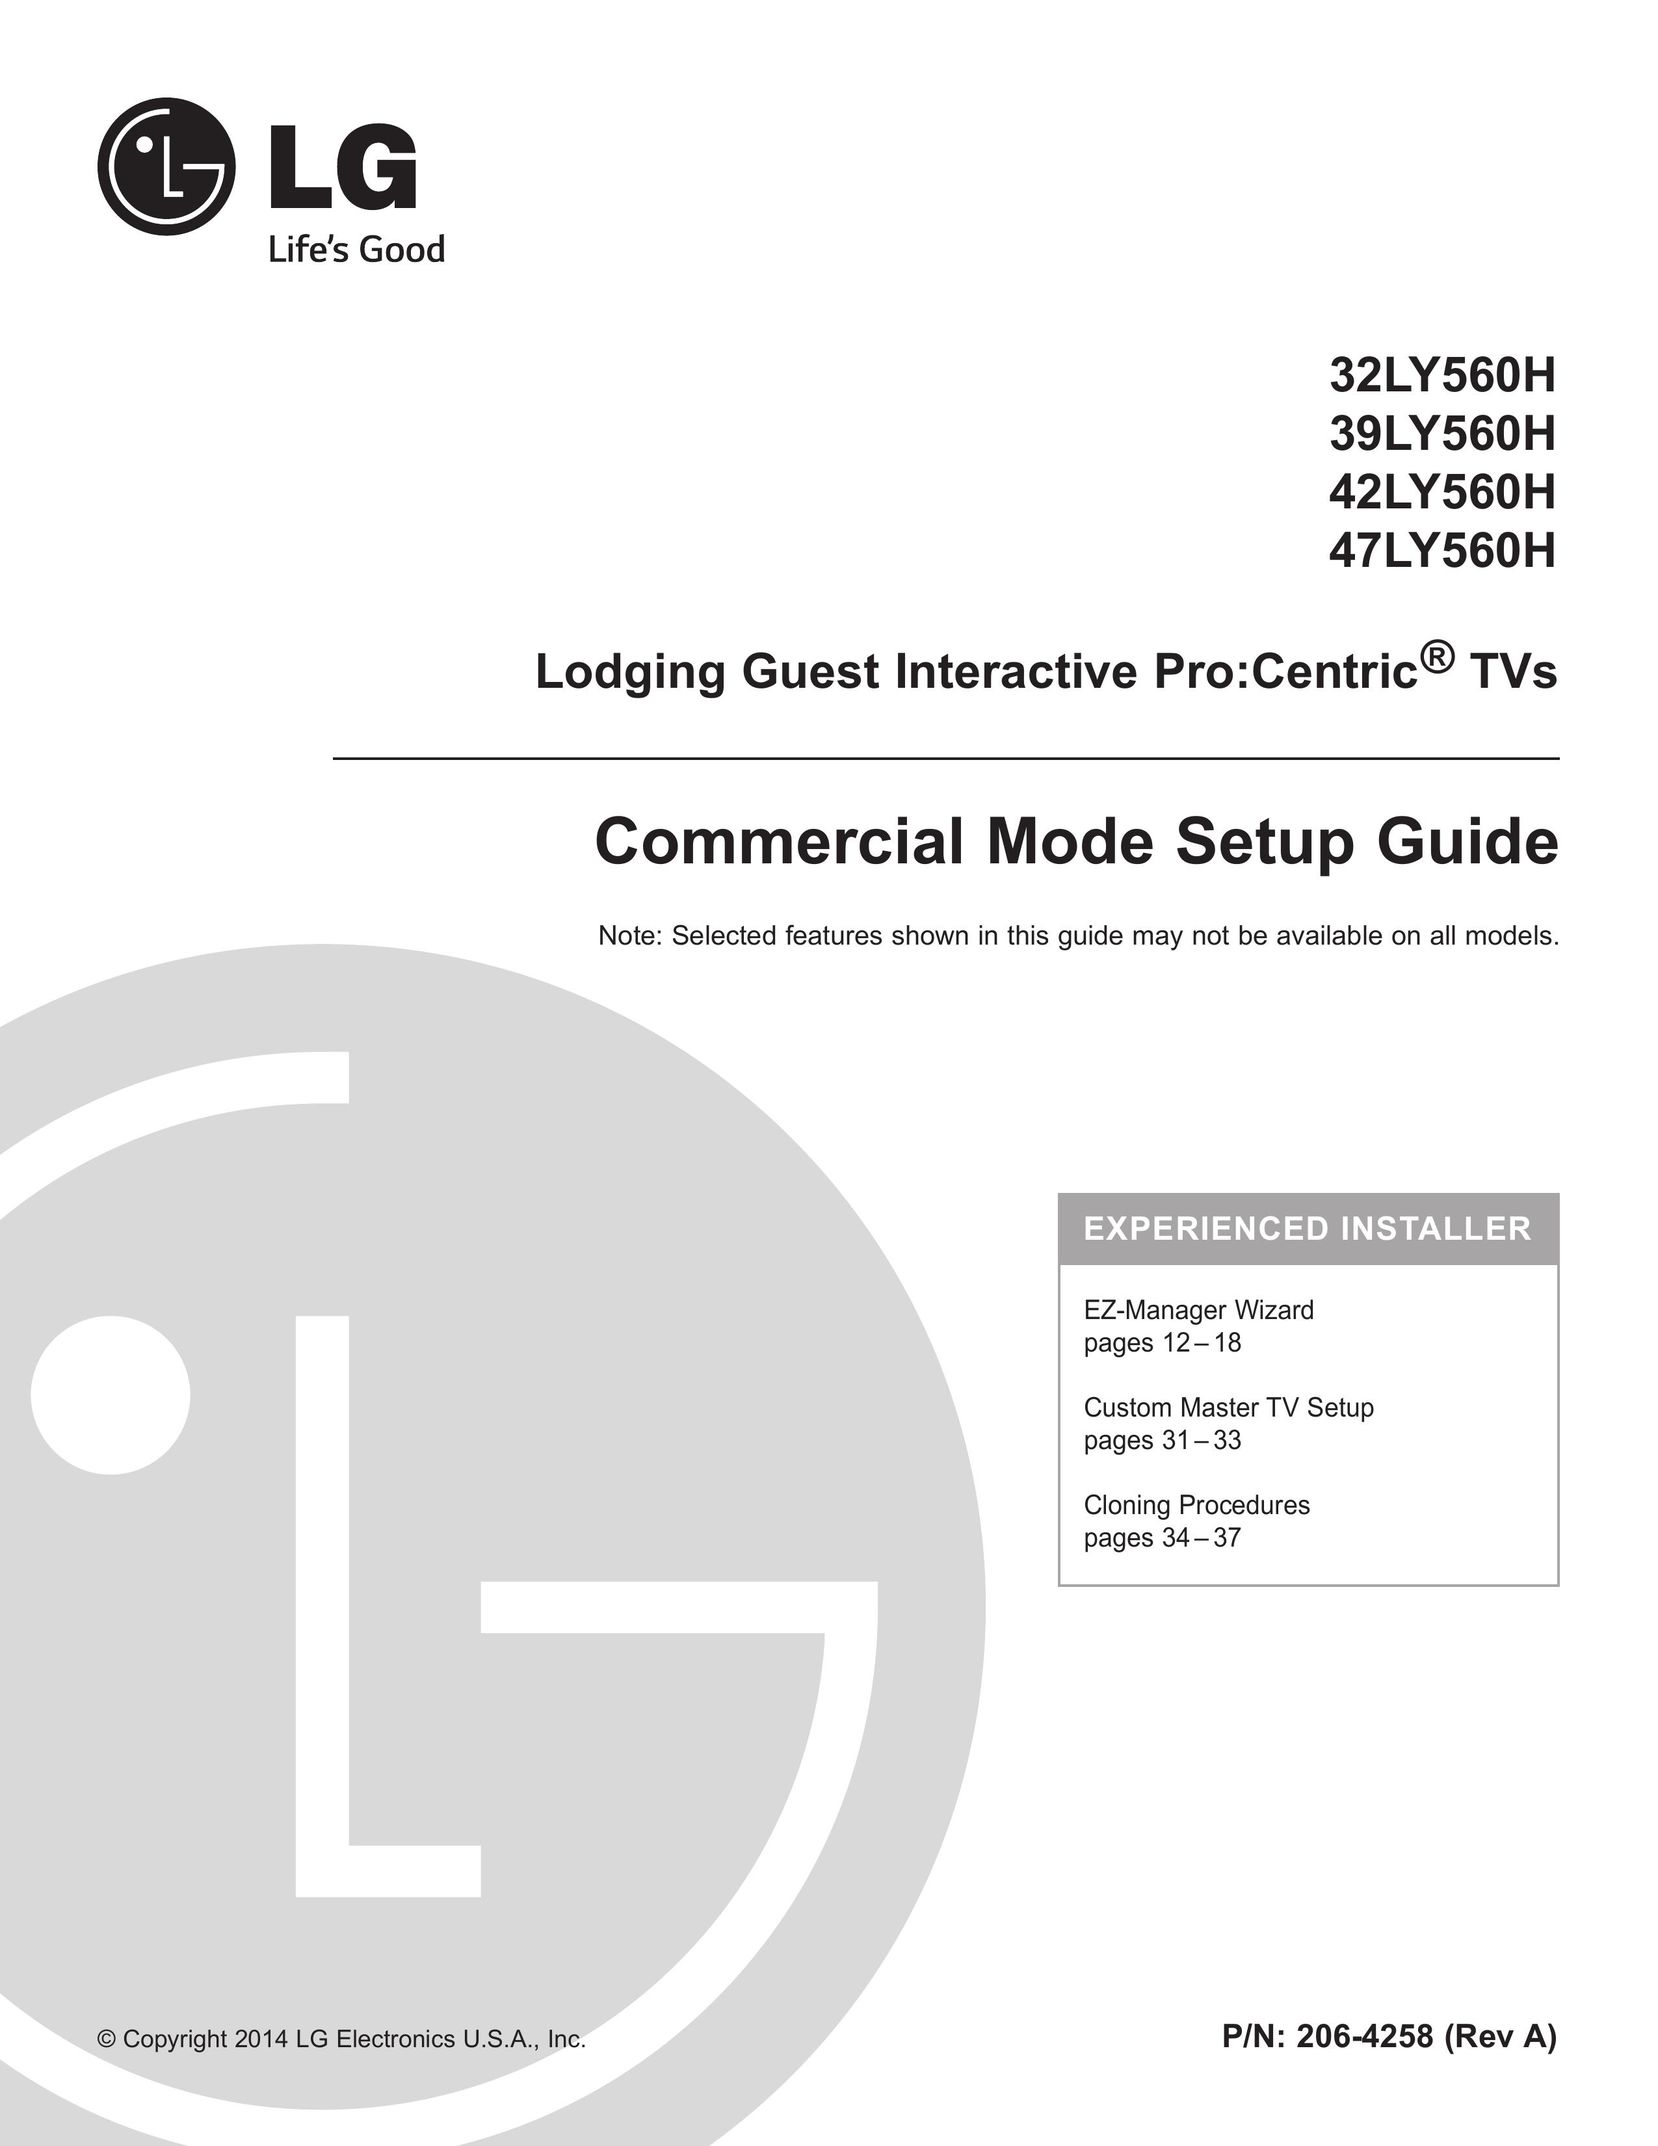 LG Electronics 47LY560H Model Vehicle User Manual